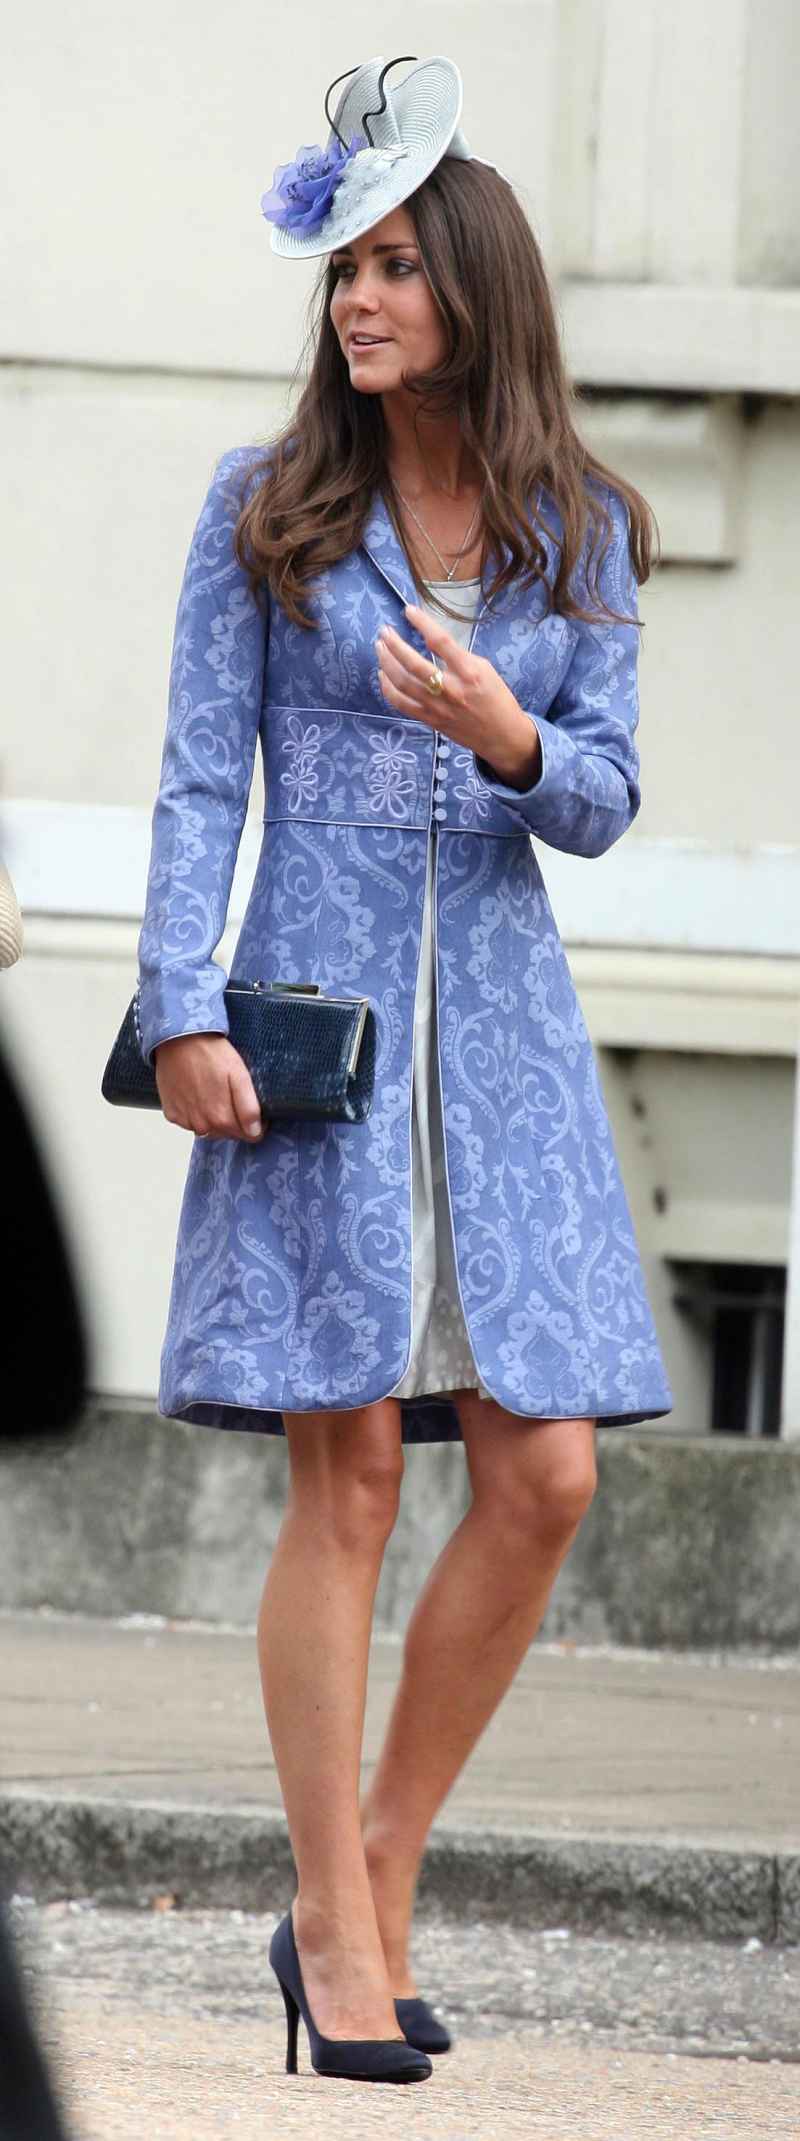 Kate Middleton's Style Evolution - August 2009